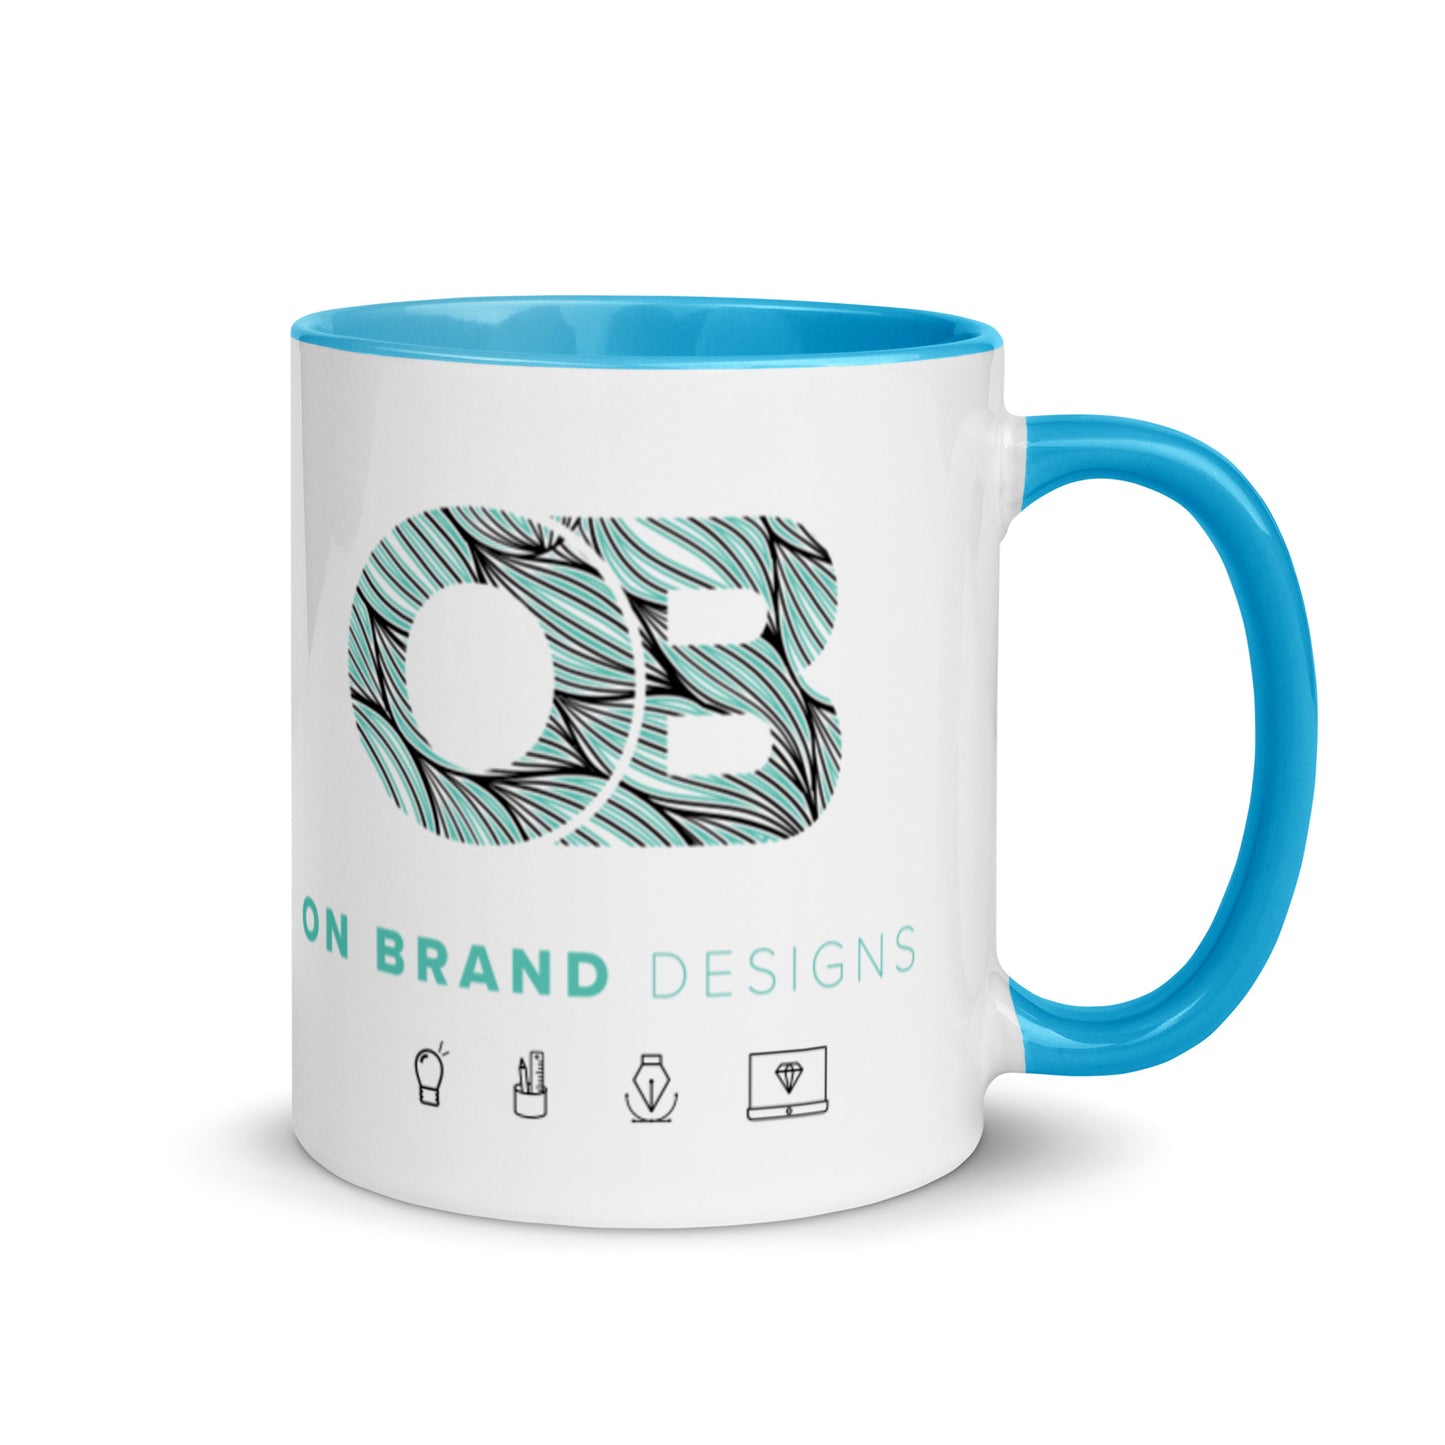 Stay on brand Mug with Color Inside